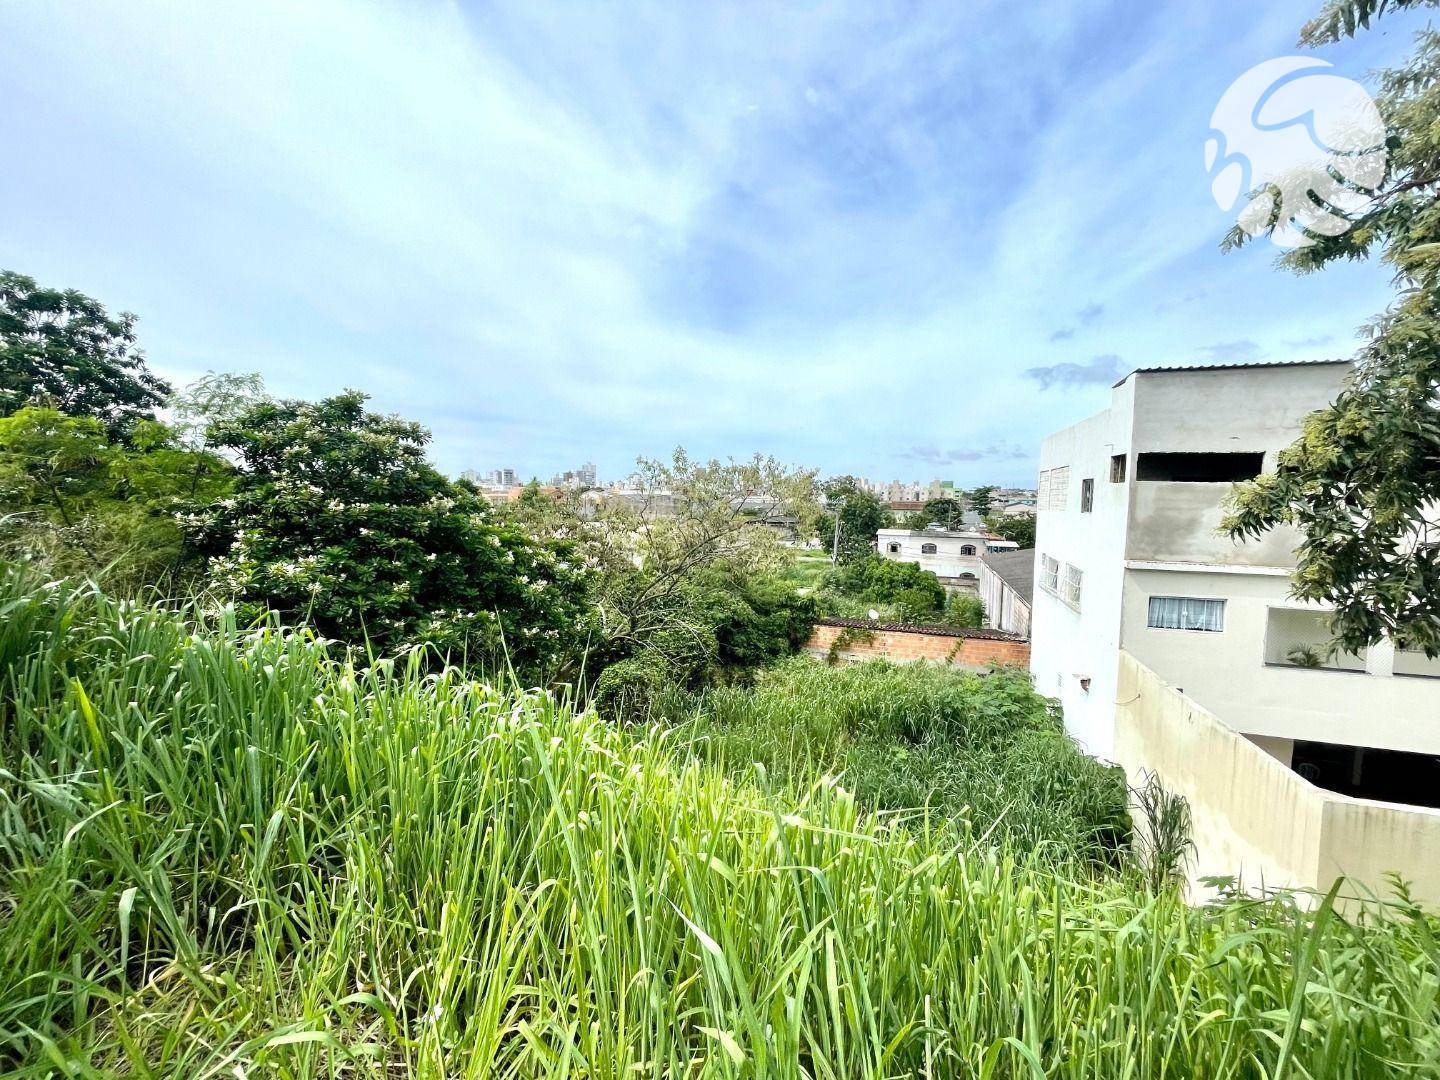 Terreno em Jardim Boa Vista, Guarapari/ES de 0m² à venda por R$ 199.000,00